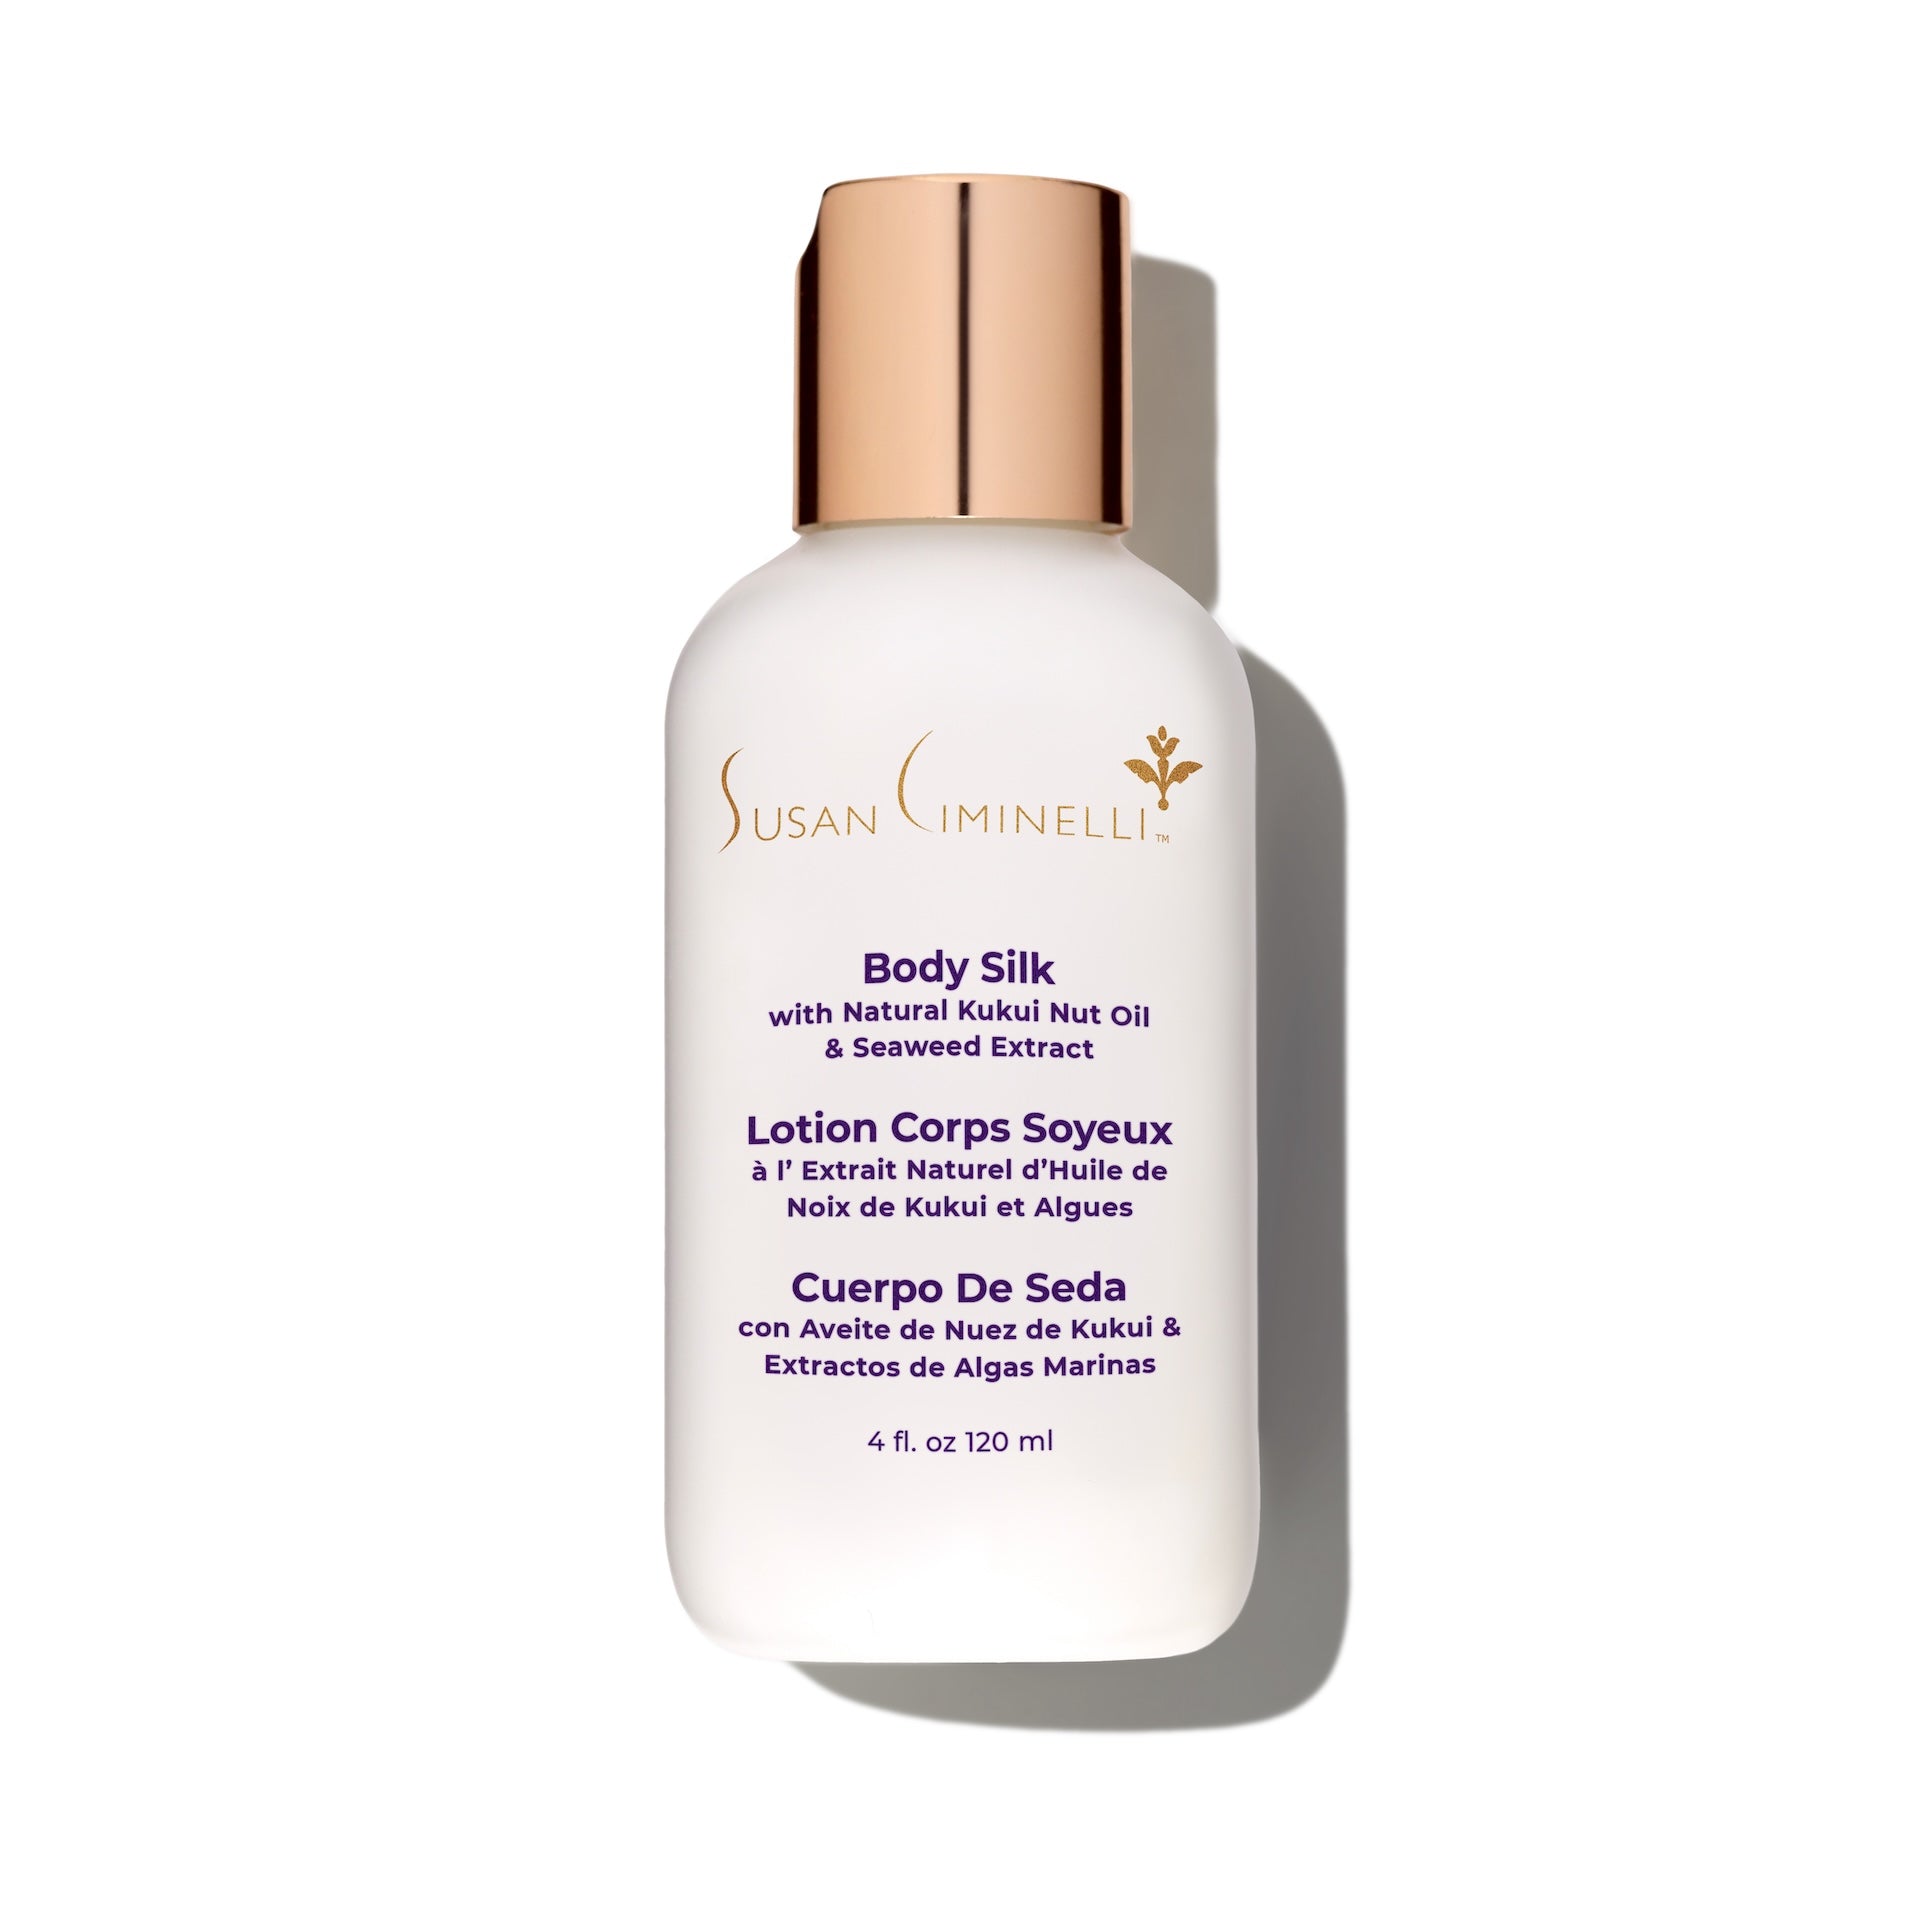 Body Silk – Susan Ciminelli / Skincare Products Inc.